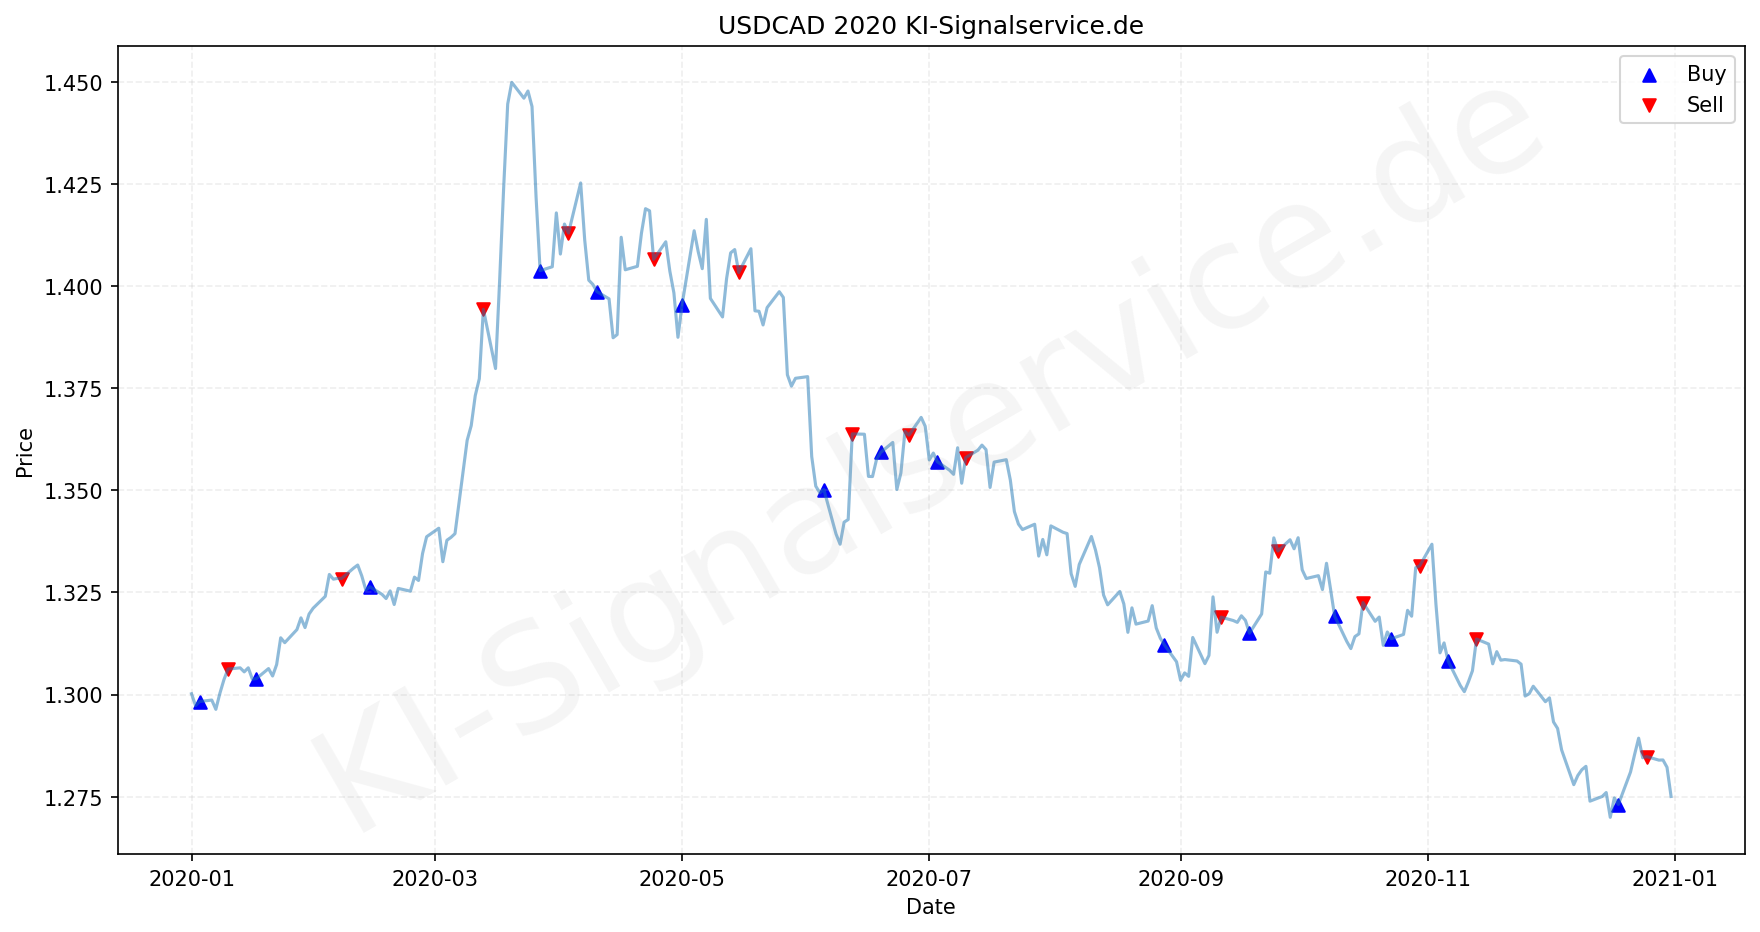 USDCAD Chart - KI Tradingsignale 2020